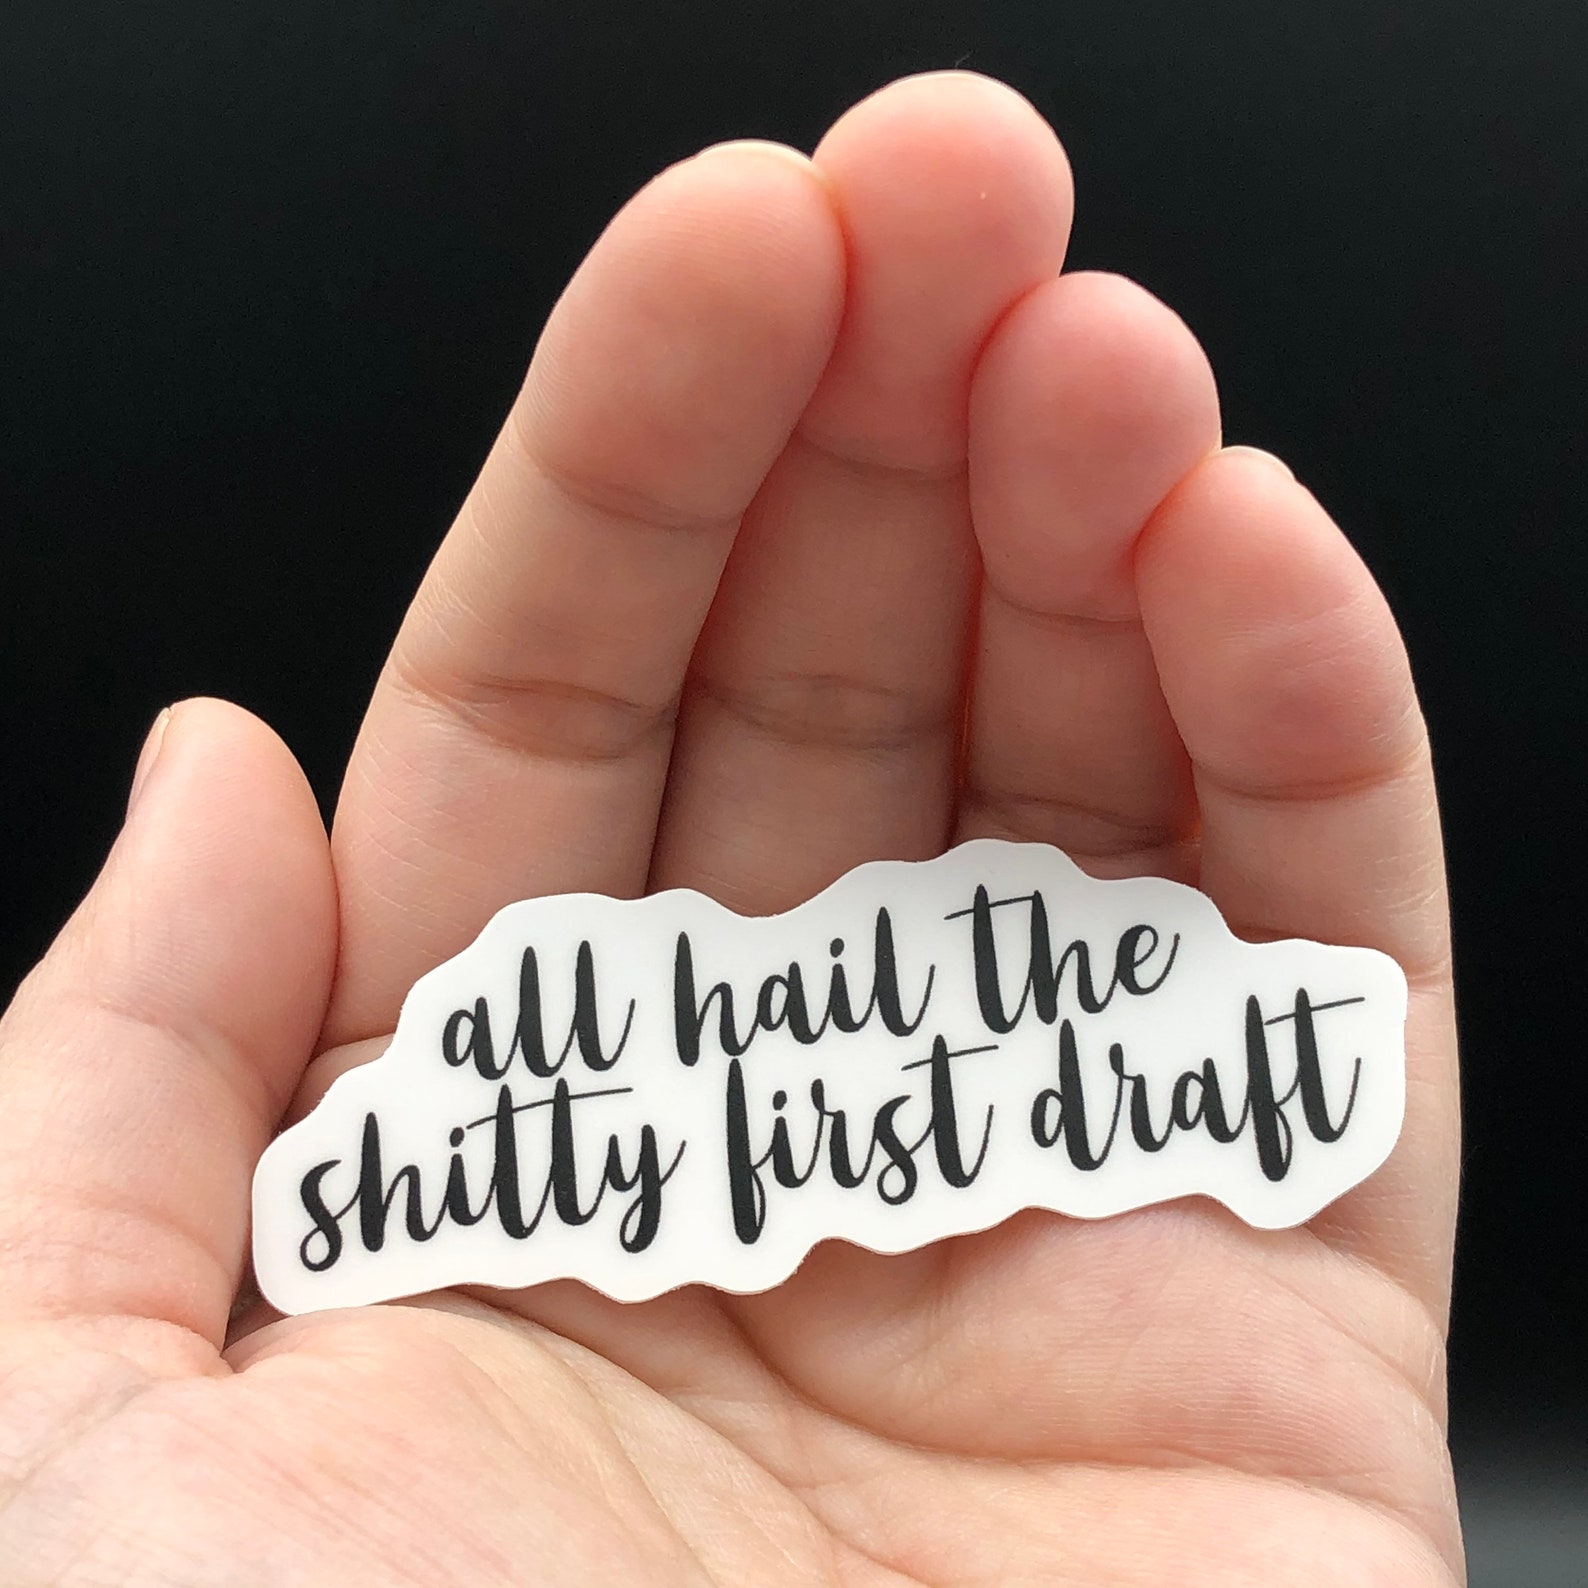 All hail the shitty first draft sticker writer sticker | Etsy